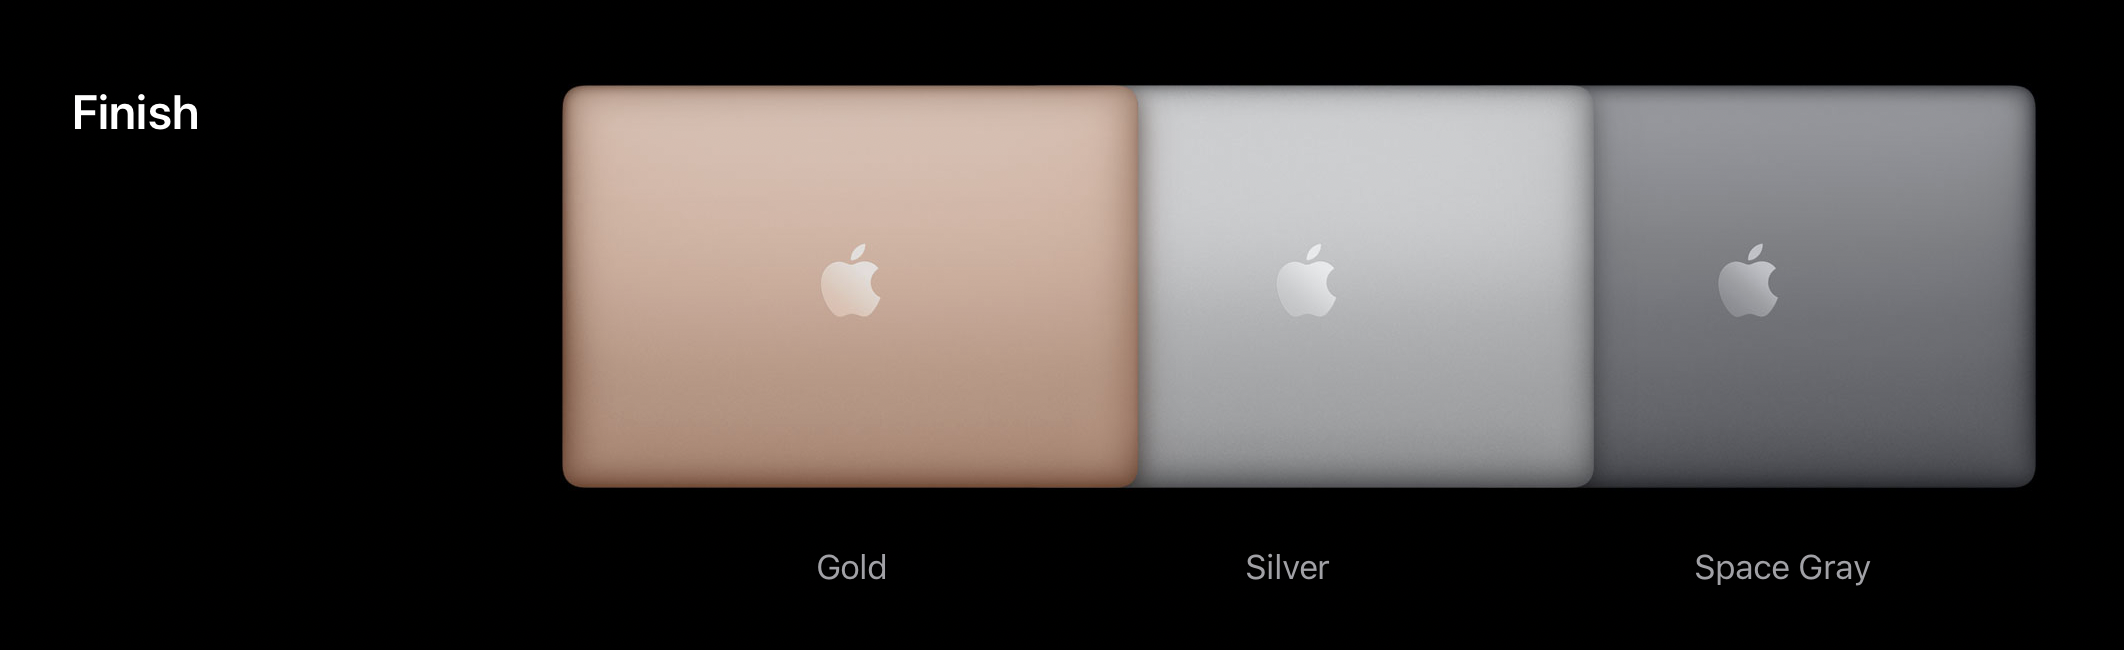 macbook air gold silver space grey